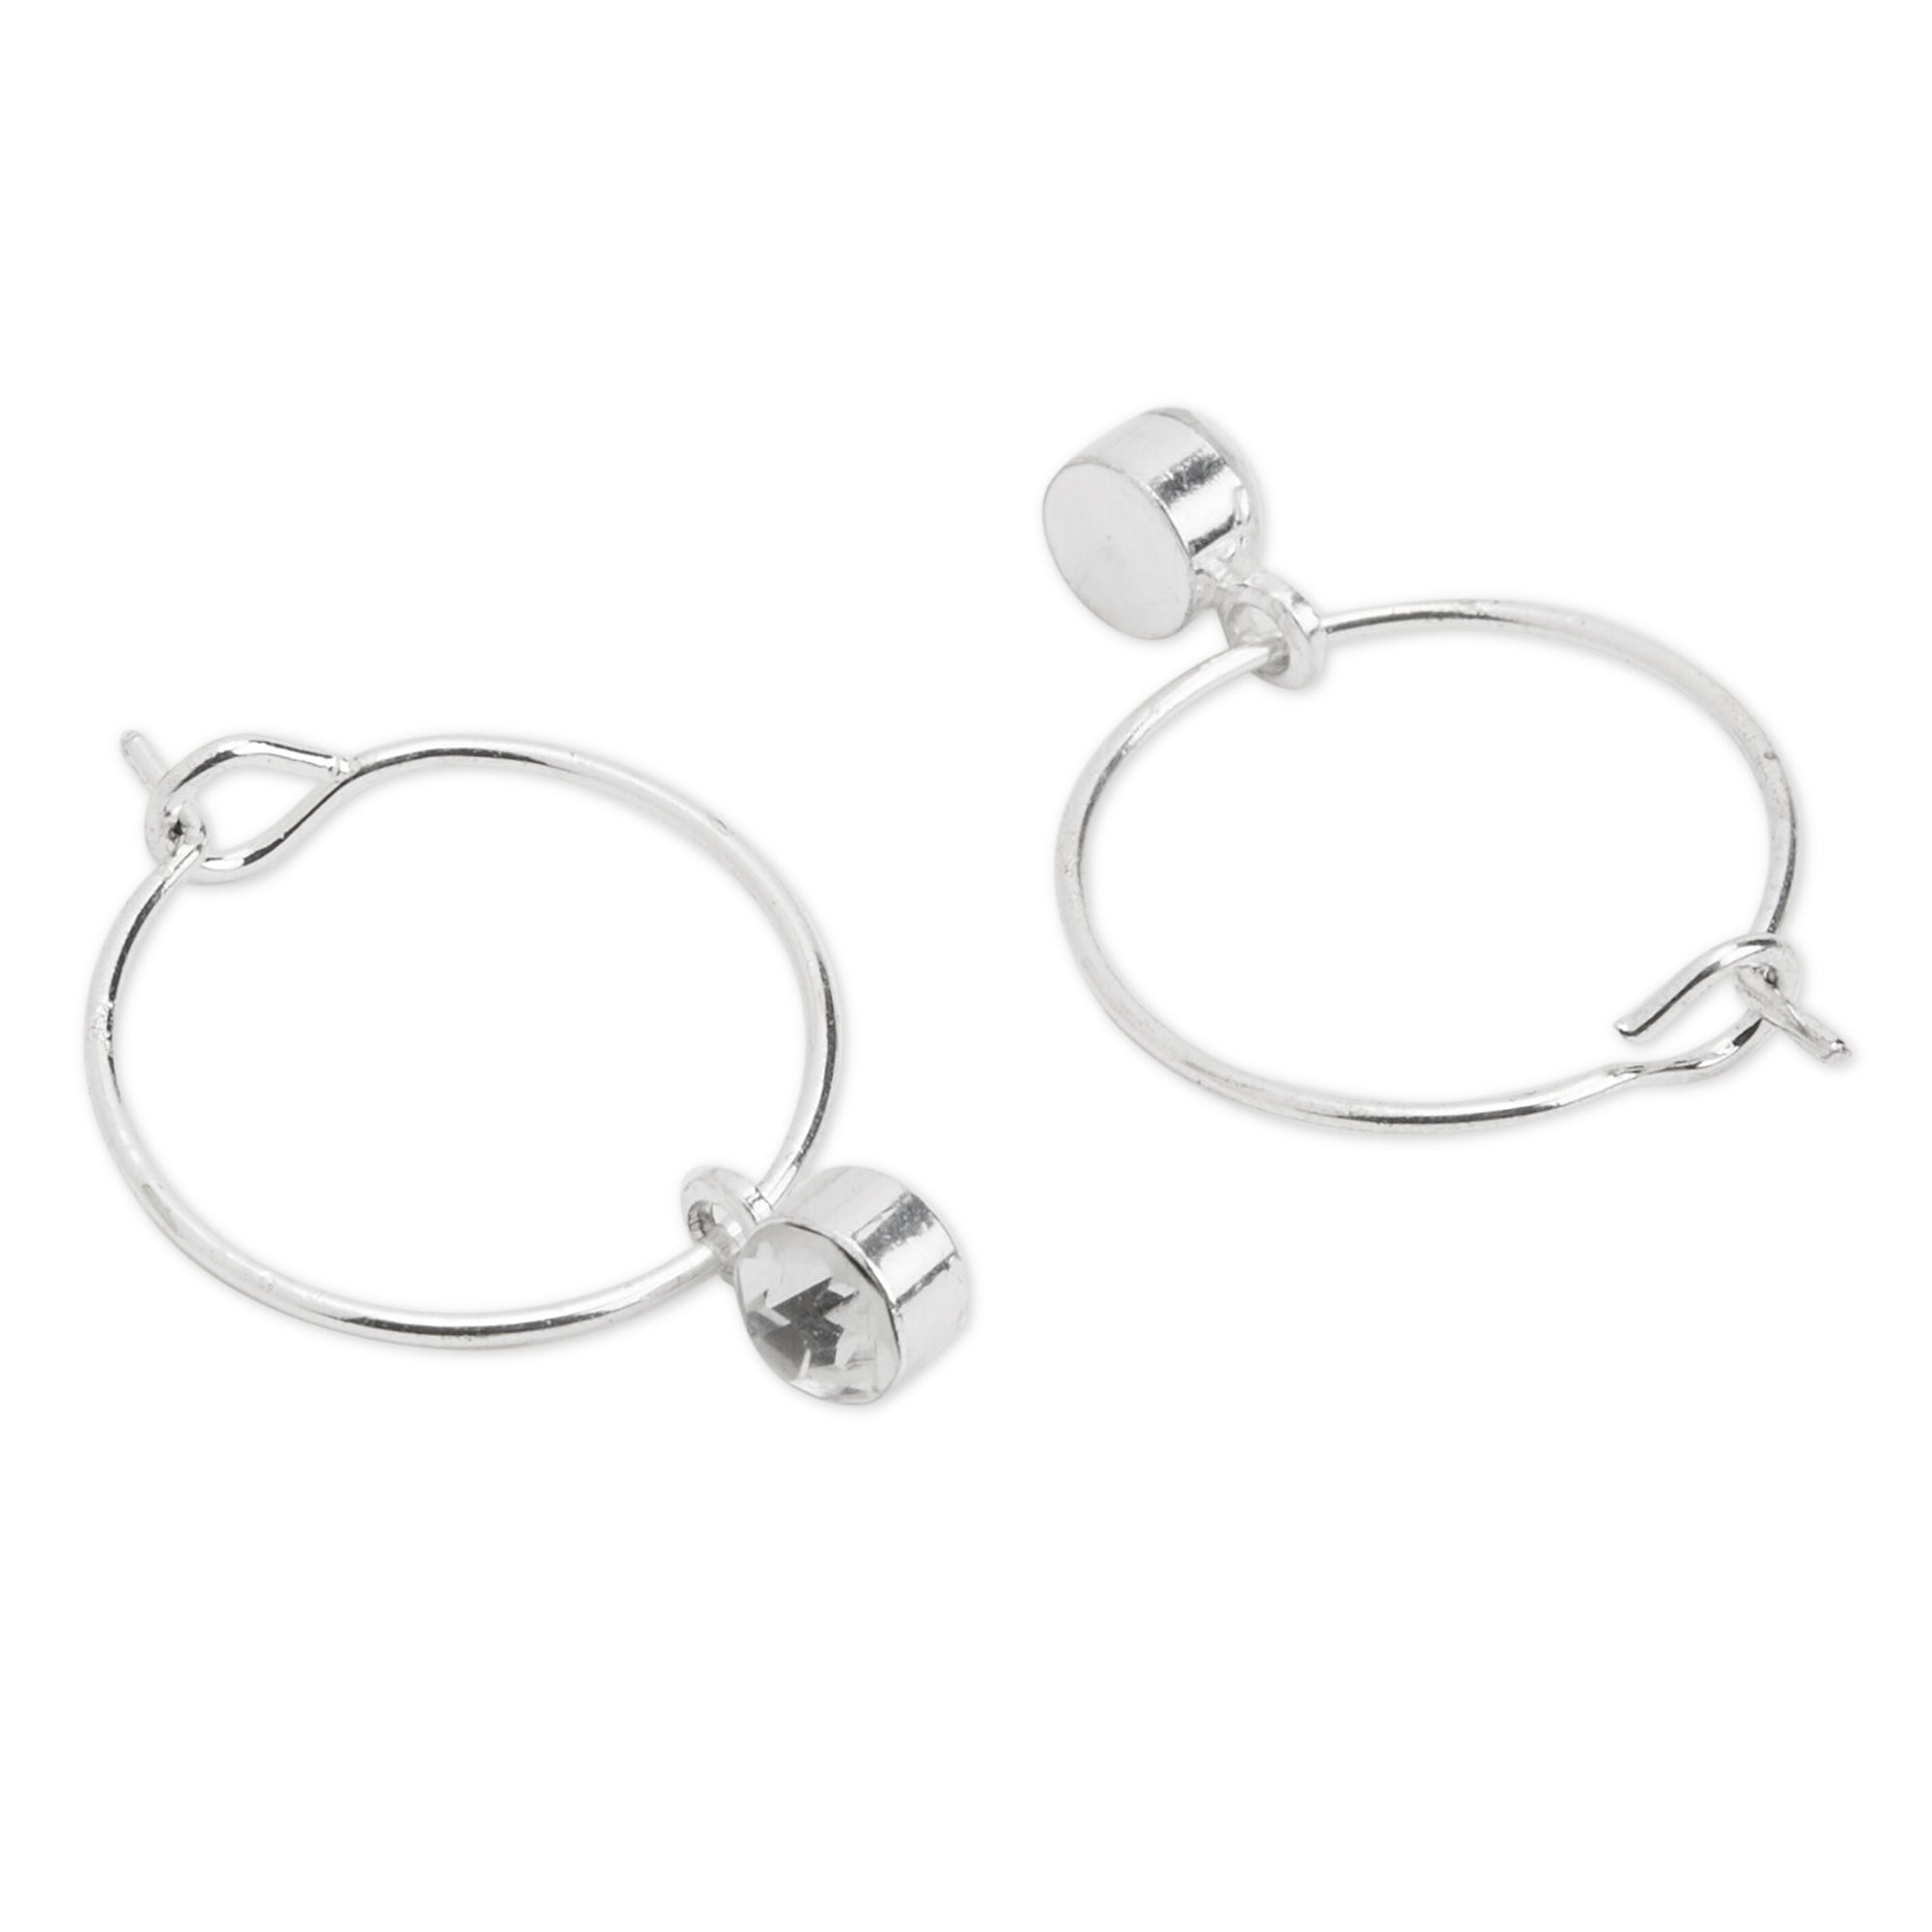 ELOISH Sterling Silver Small Hoop Earrings for Kids, Men and Women